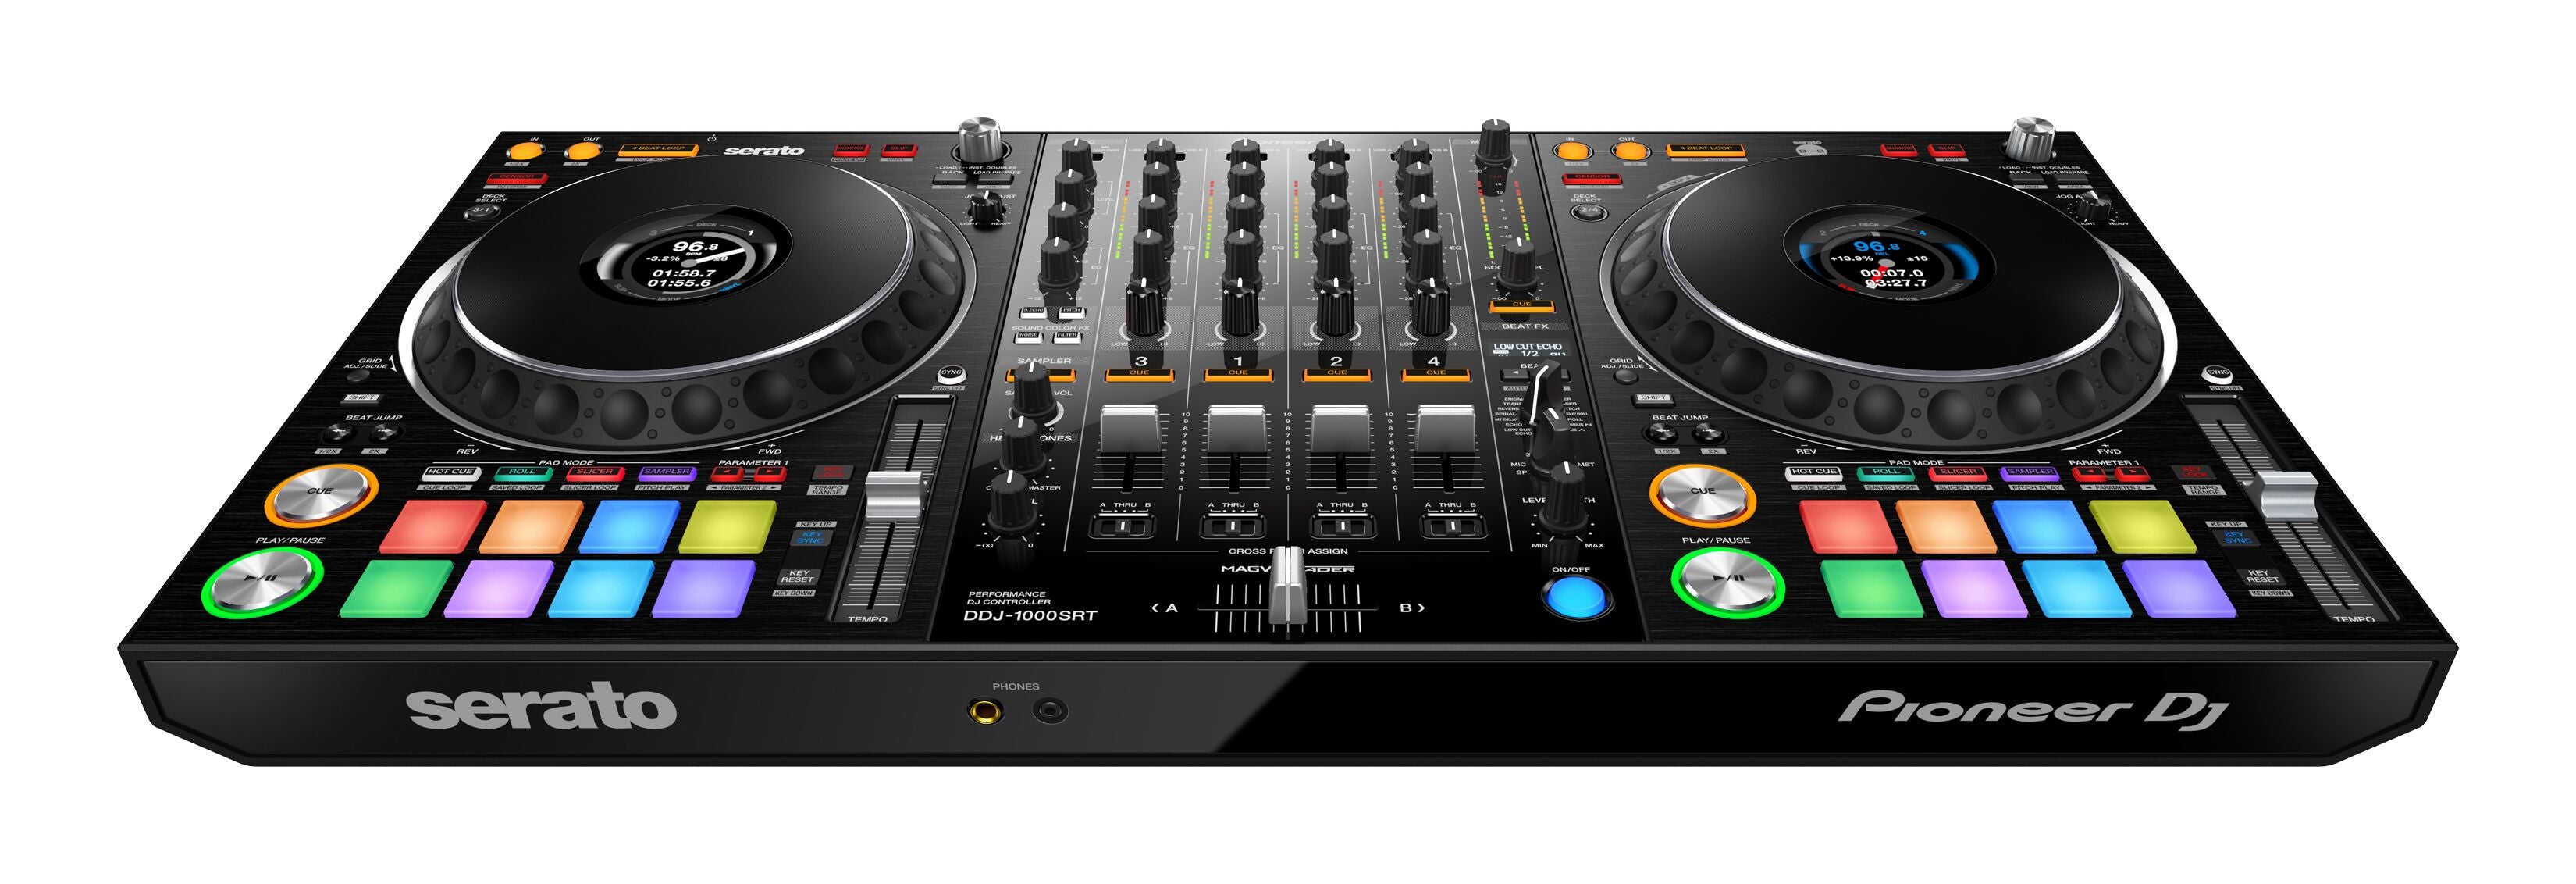 Pioneer DDJ1000SRT DJ Controller for Serato DJ Pro